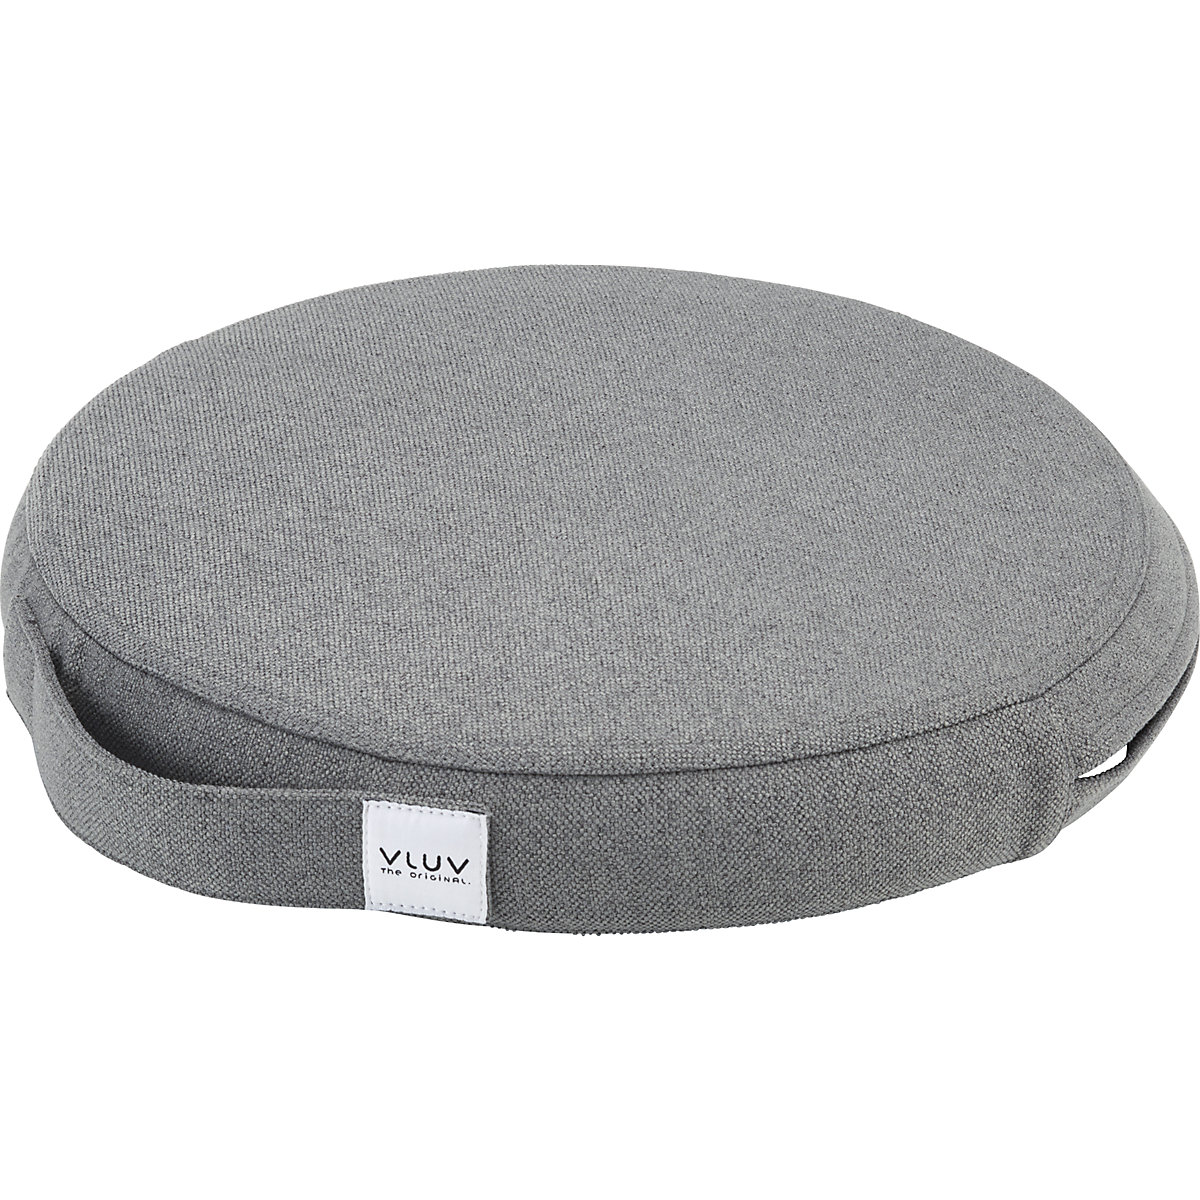 PIL&PED SOVA balance cushion – VLUV, with fabric cover, Ø 400 mm, ash grey-10